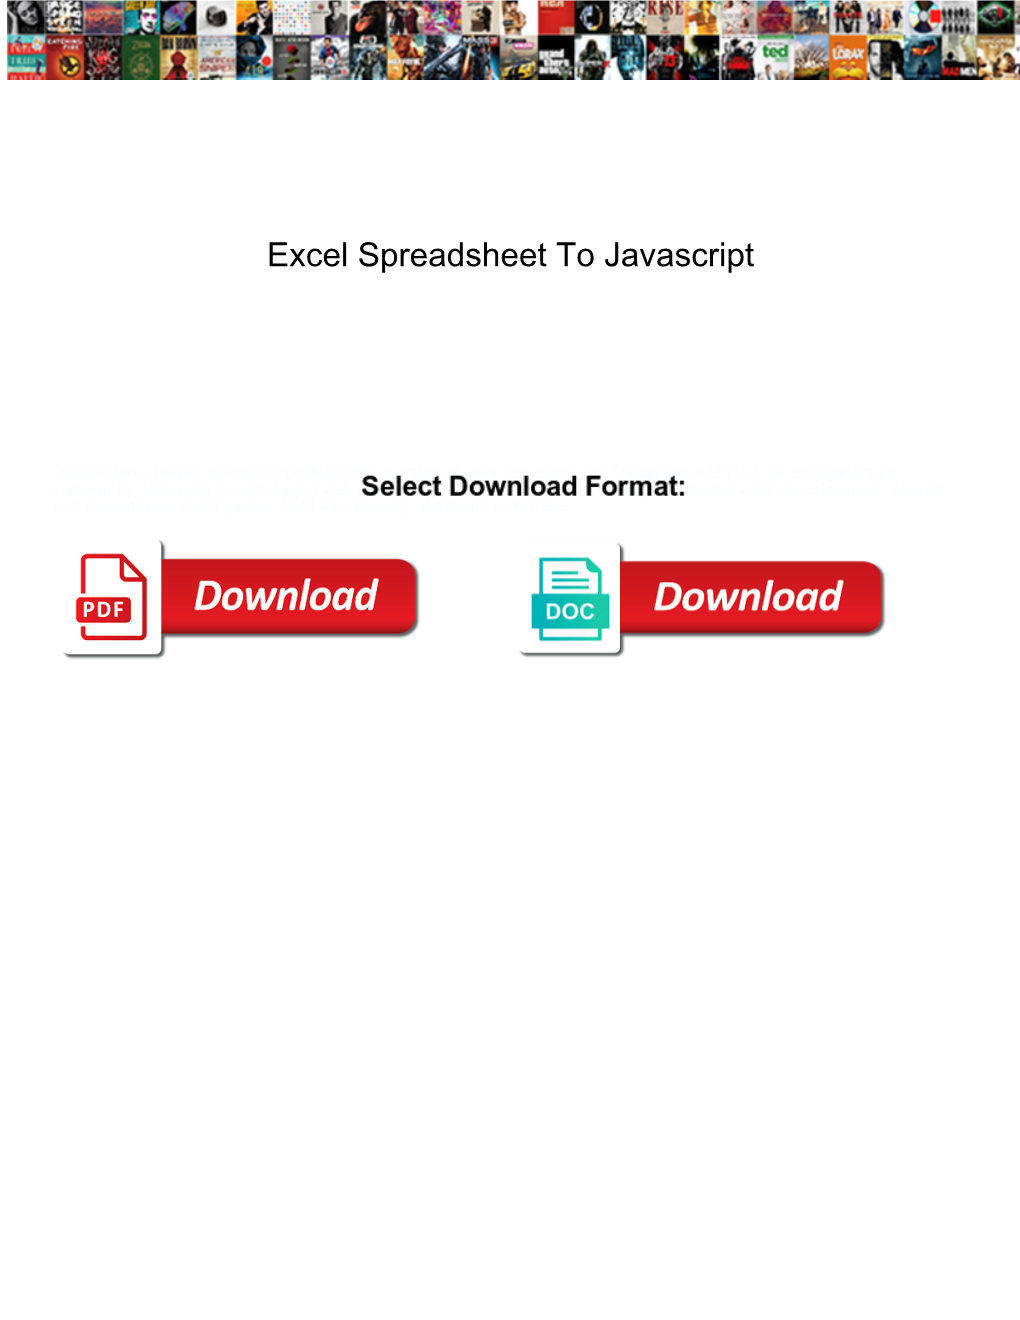 Excel Spreadsheet to Javascript